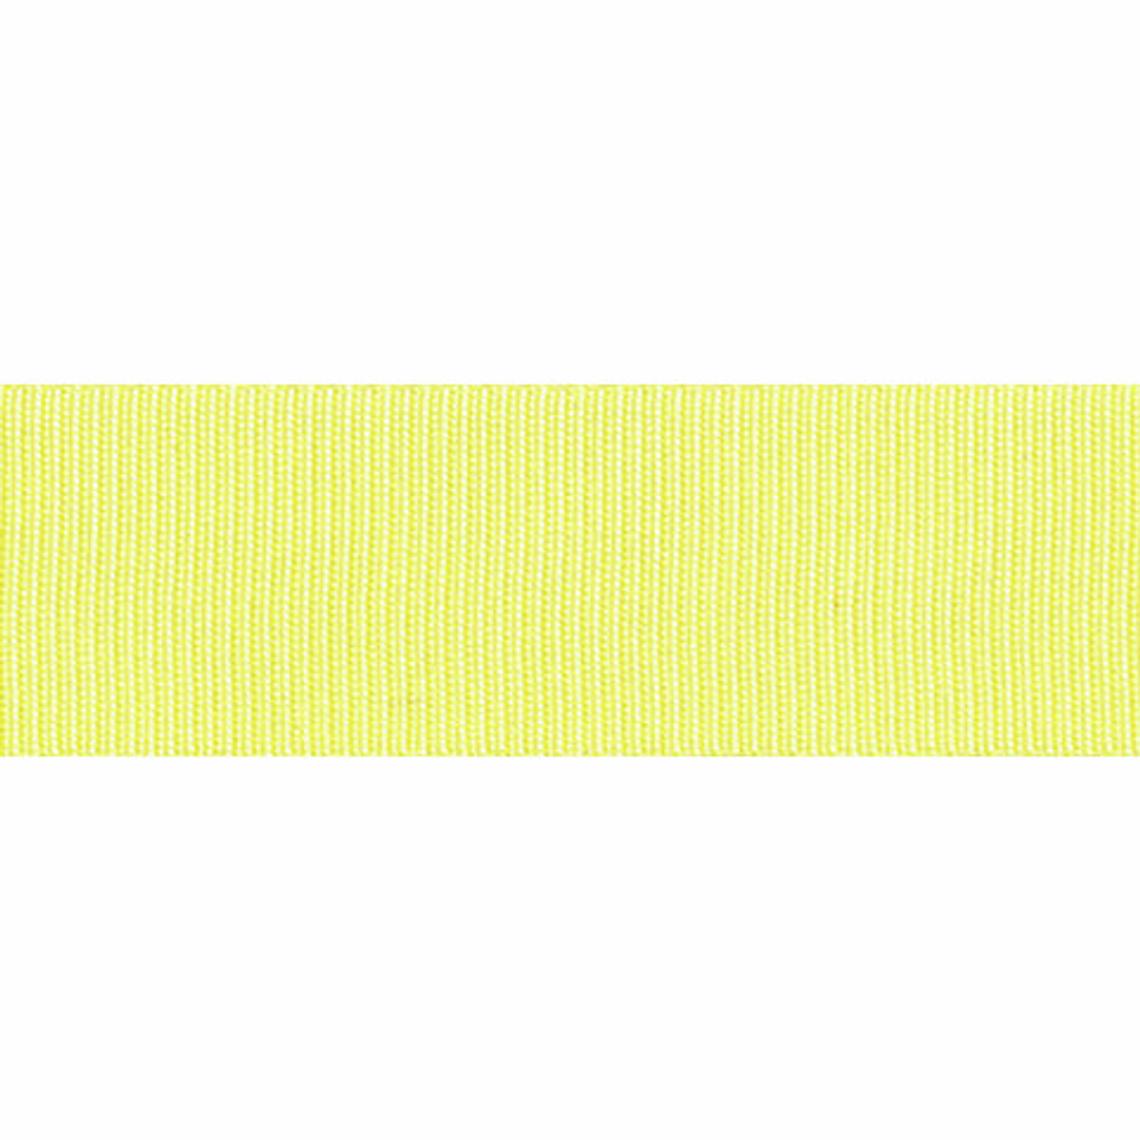 5 Metres Yellow Lemon- Grossgrain - 16mm Wide - Clothes, Funishing, Craft